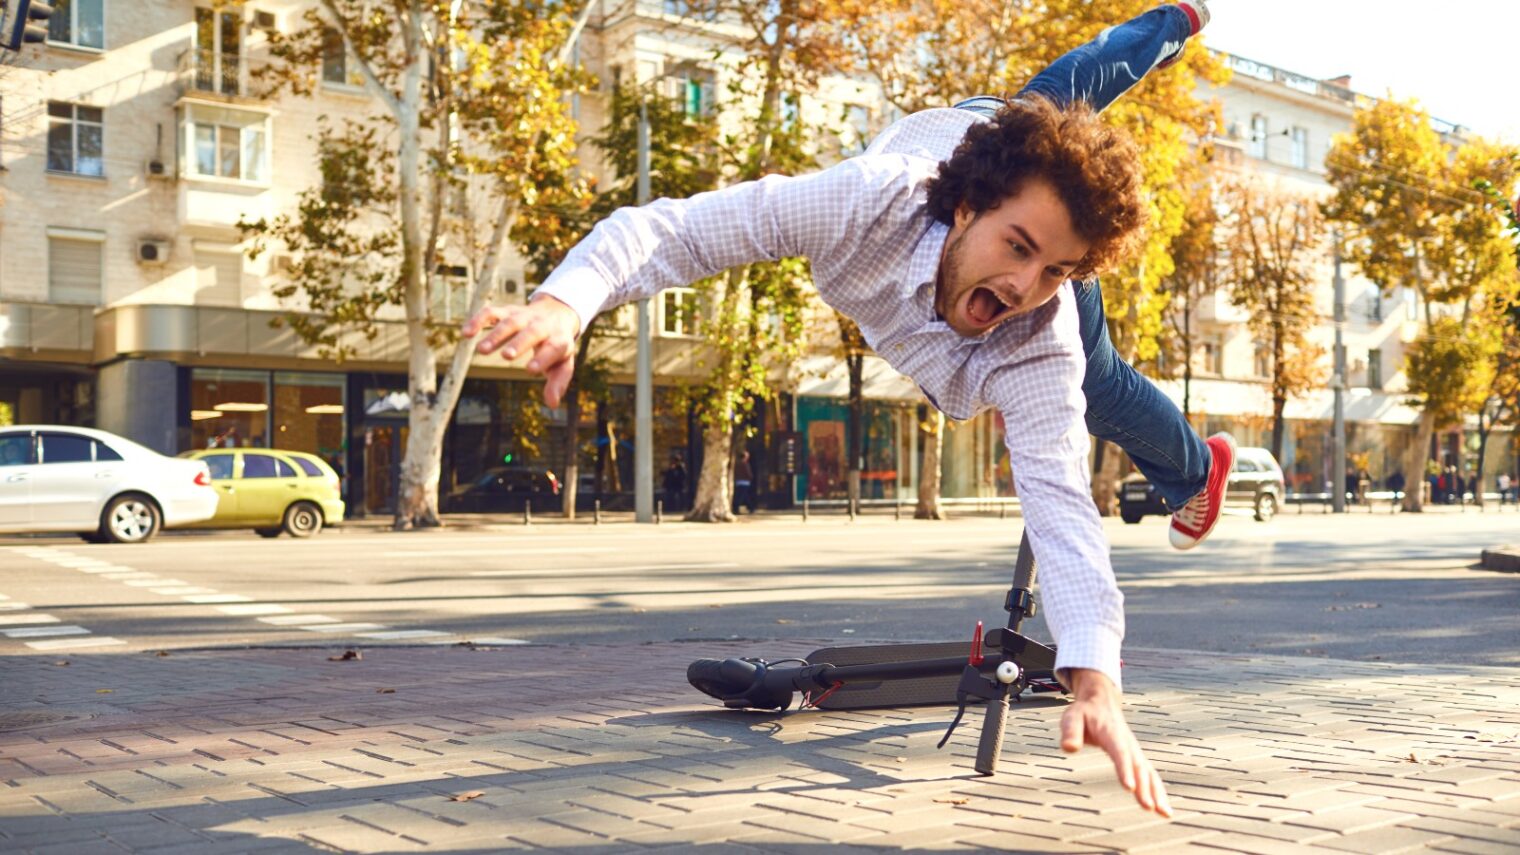 Photo of an e-scooter accident via Shutterstock.com